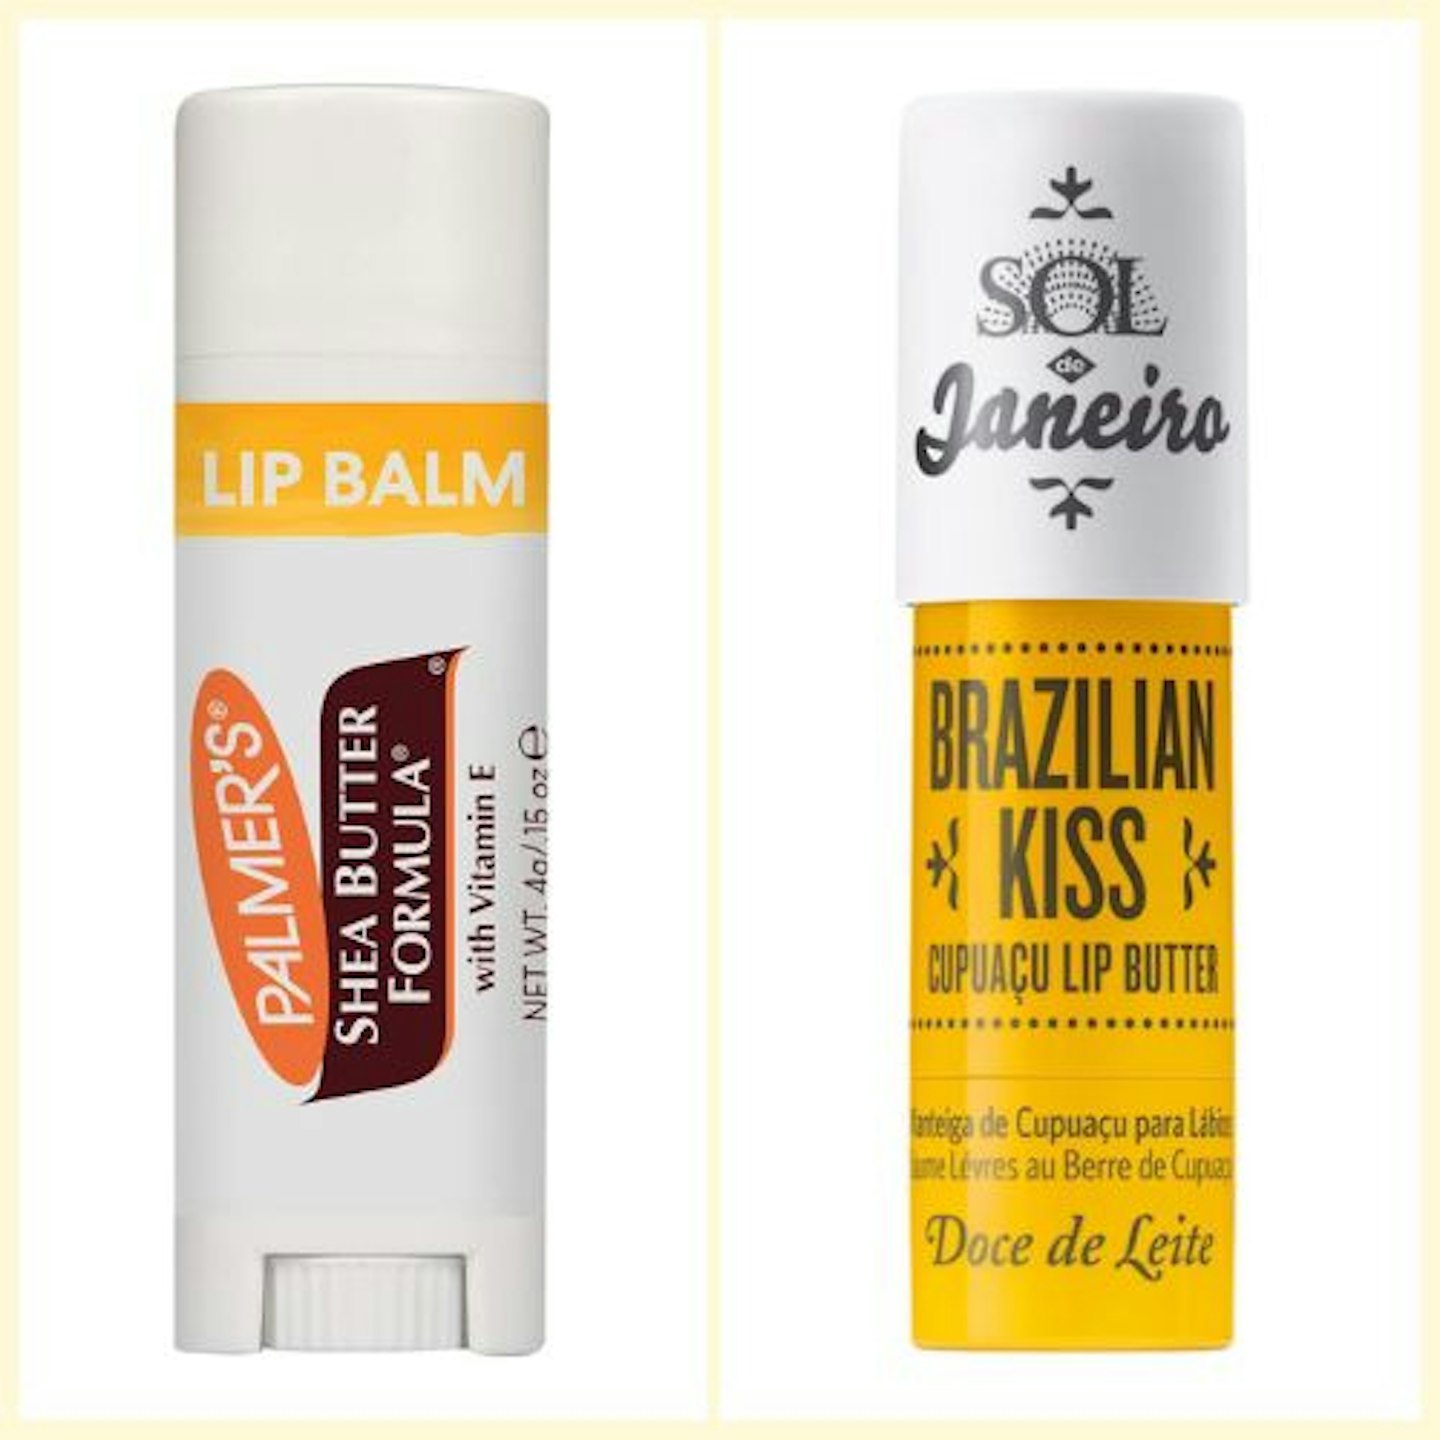 Sol de Janeiro Brazilian Kiss Cupuaçu Lip Butter dupe